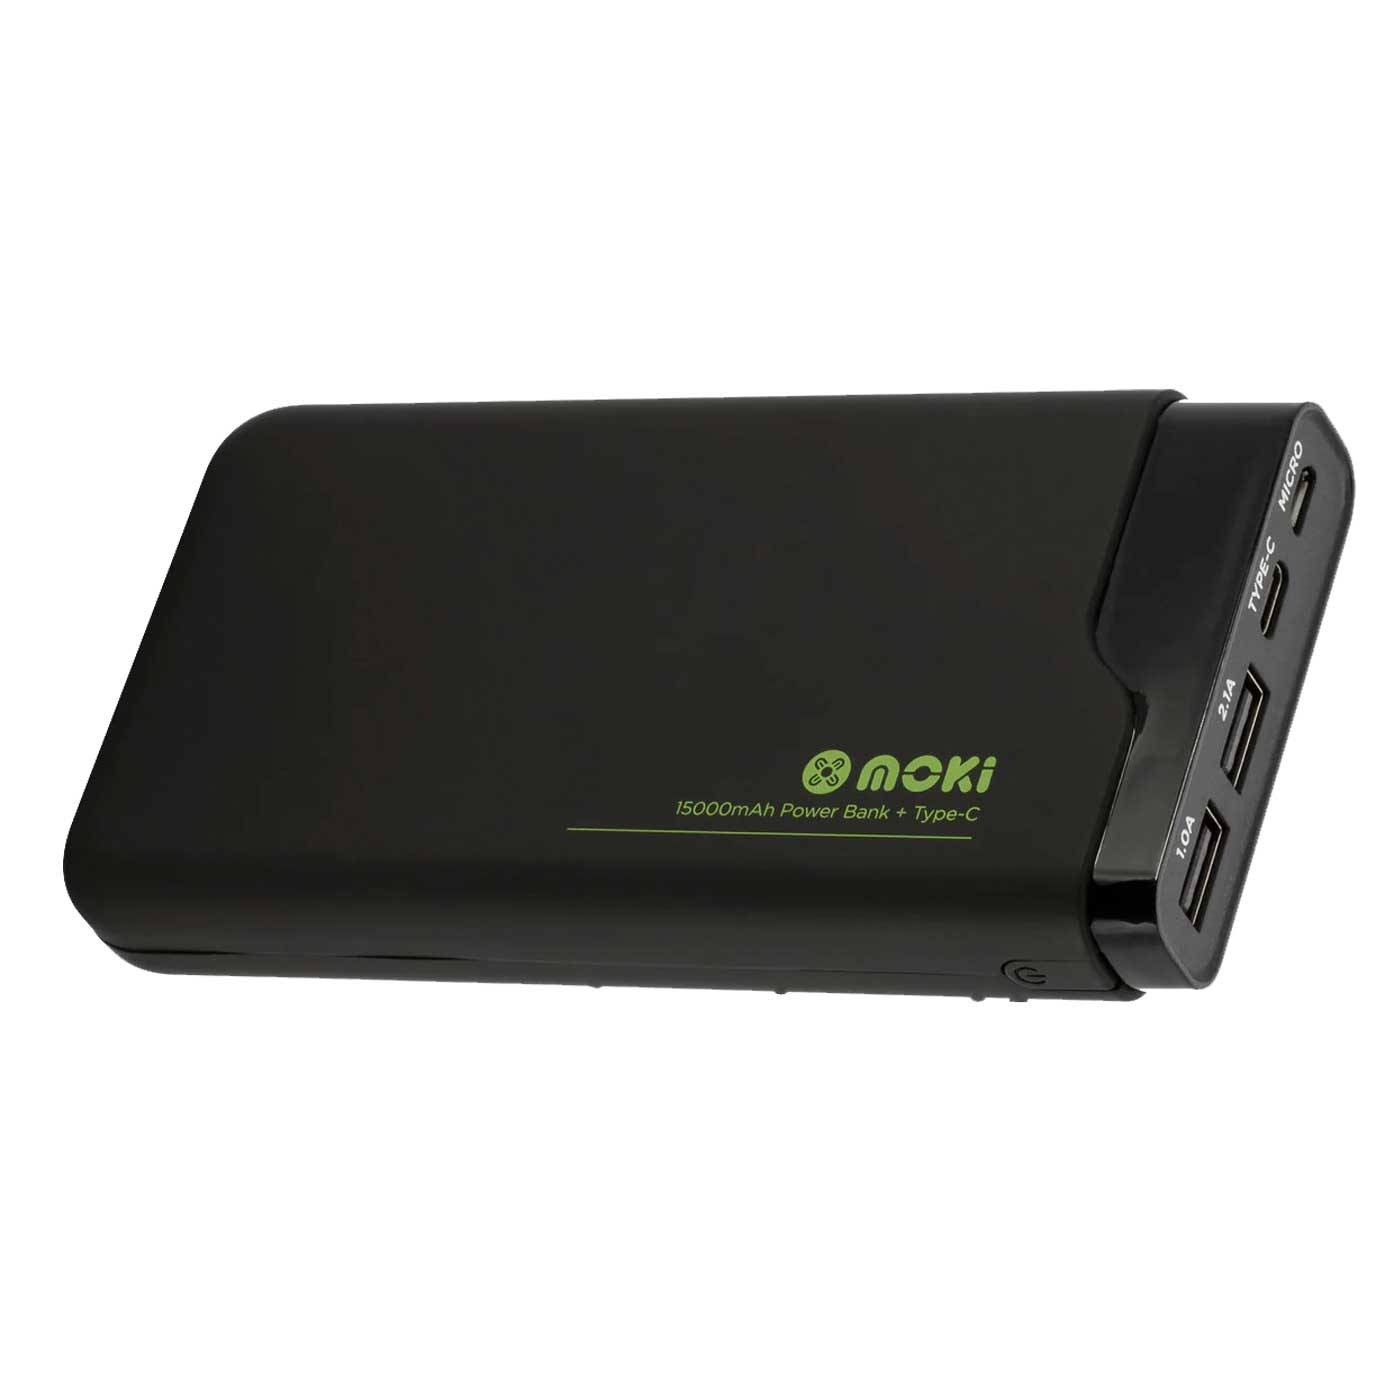 Moki Power Bank Plus 15000mAh USB + Type-C Fast Charge